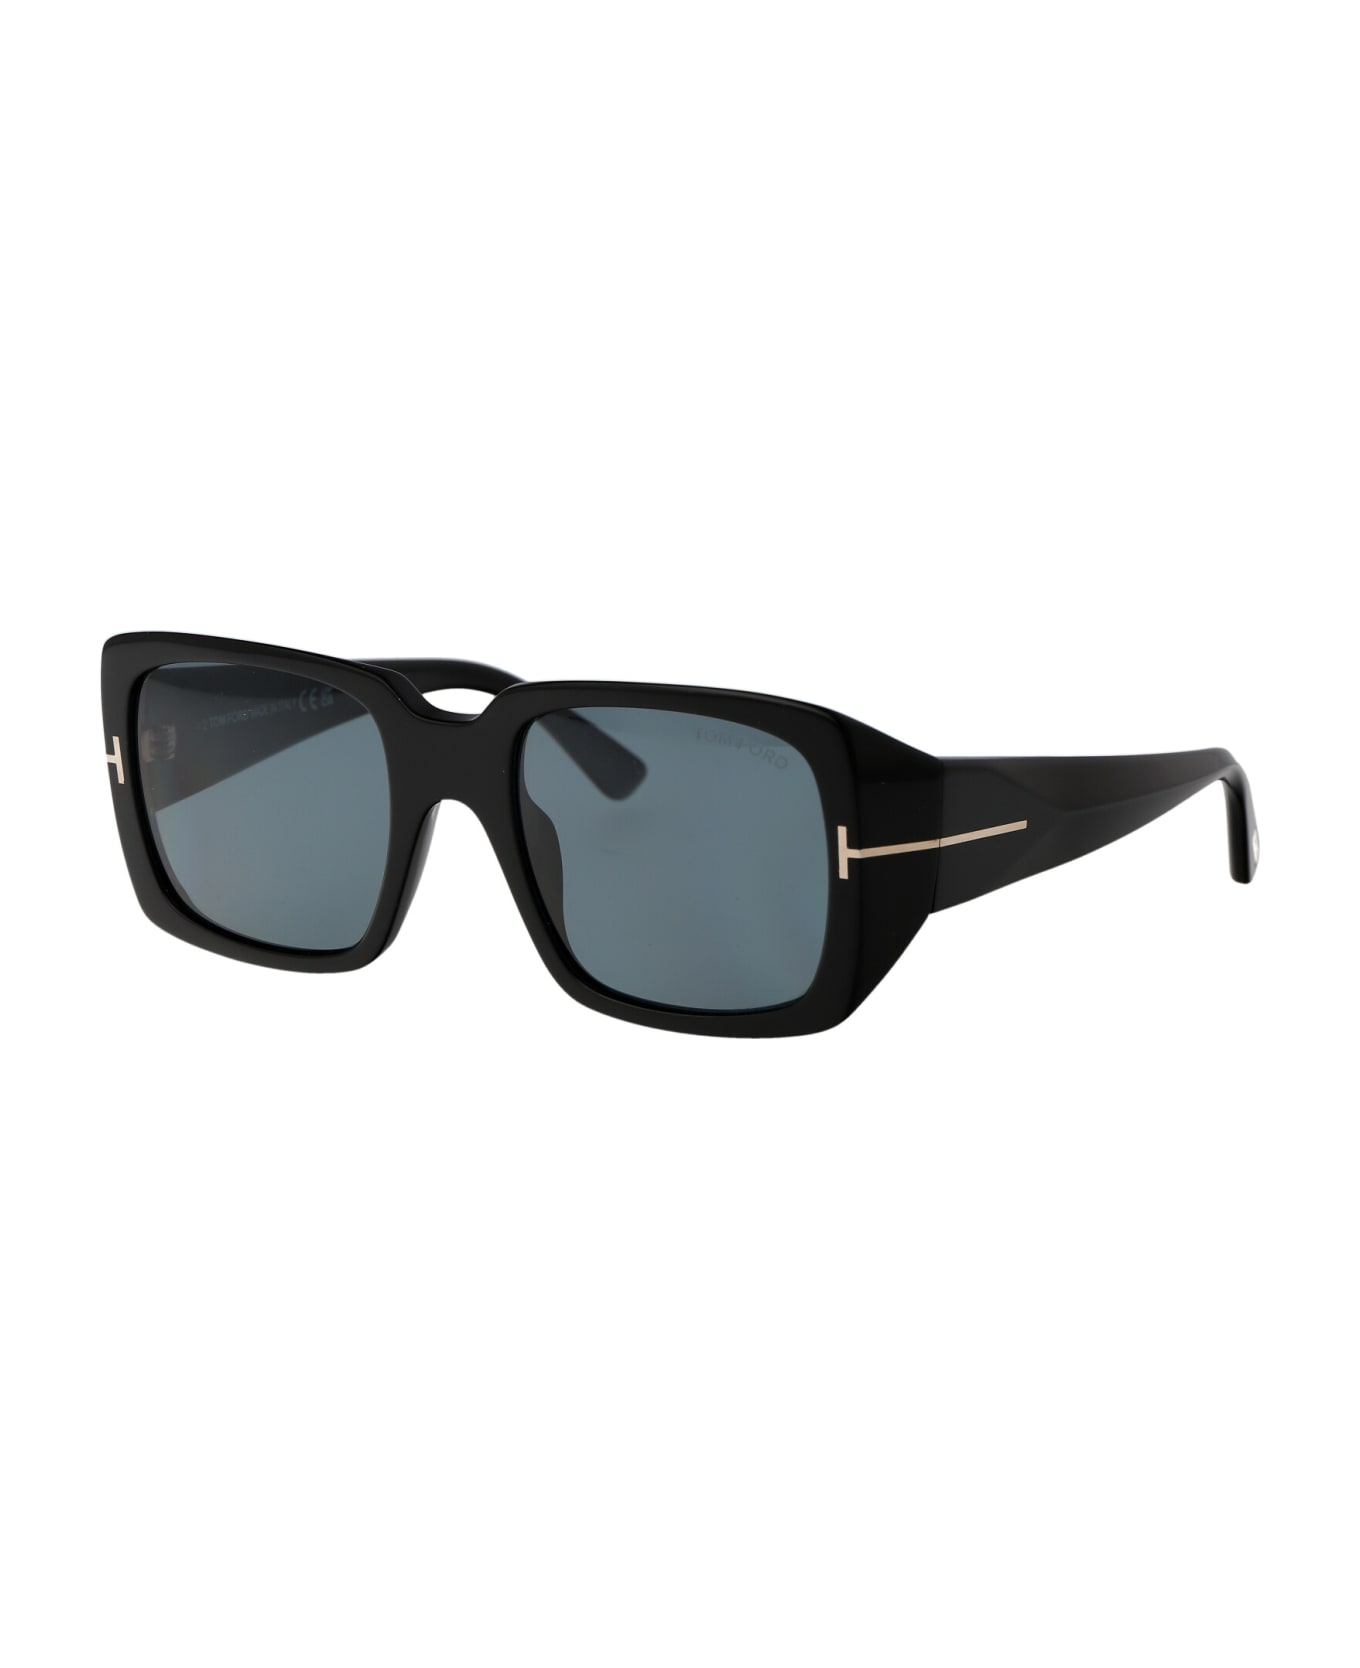 Tom Ford Eyewear Ryder-02 Sunglasses - 01V Nero Lucido / Blu